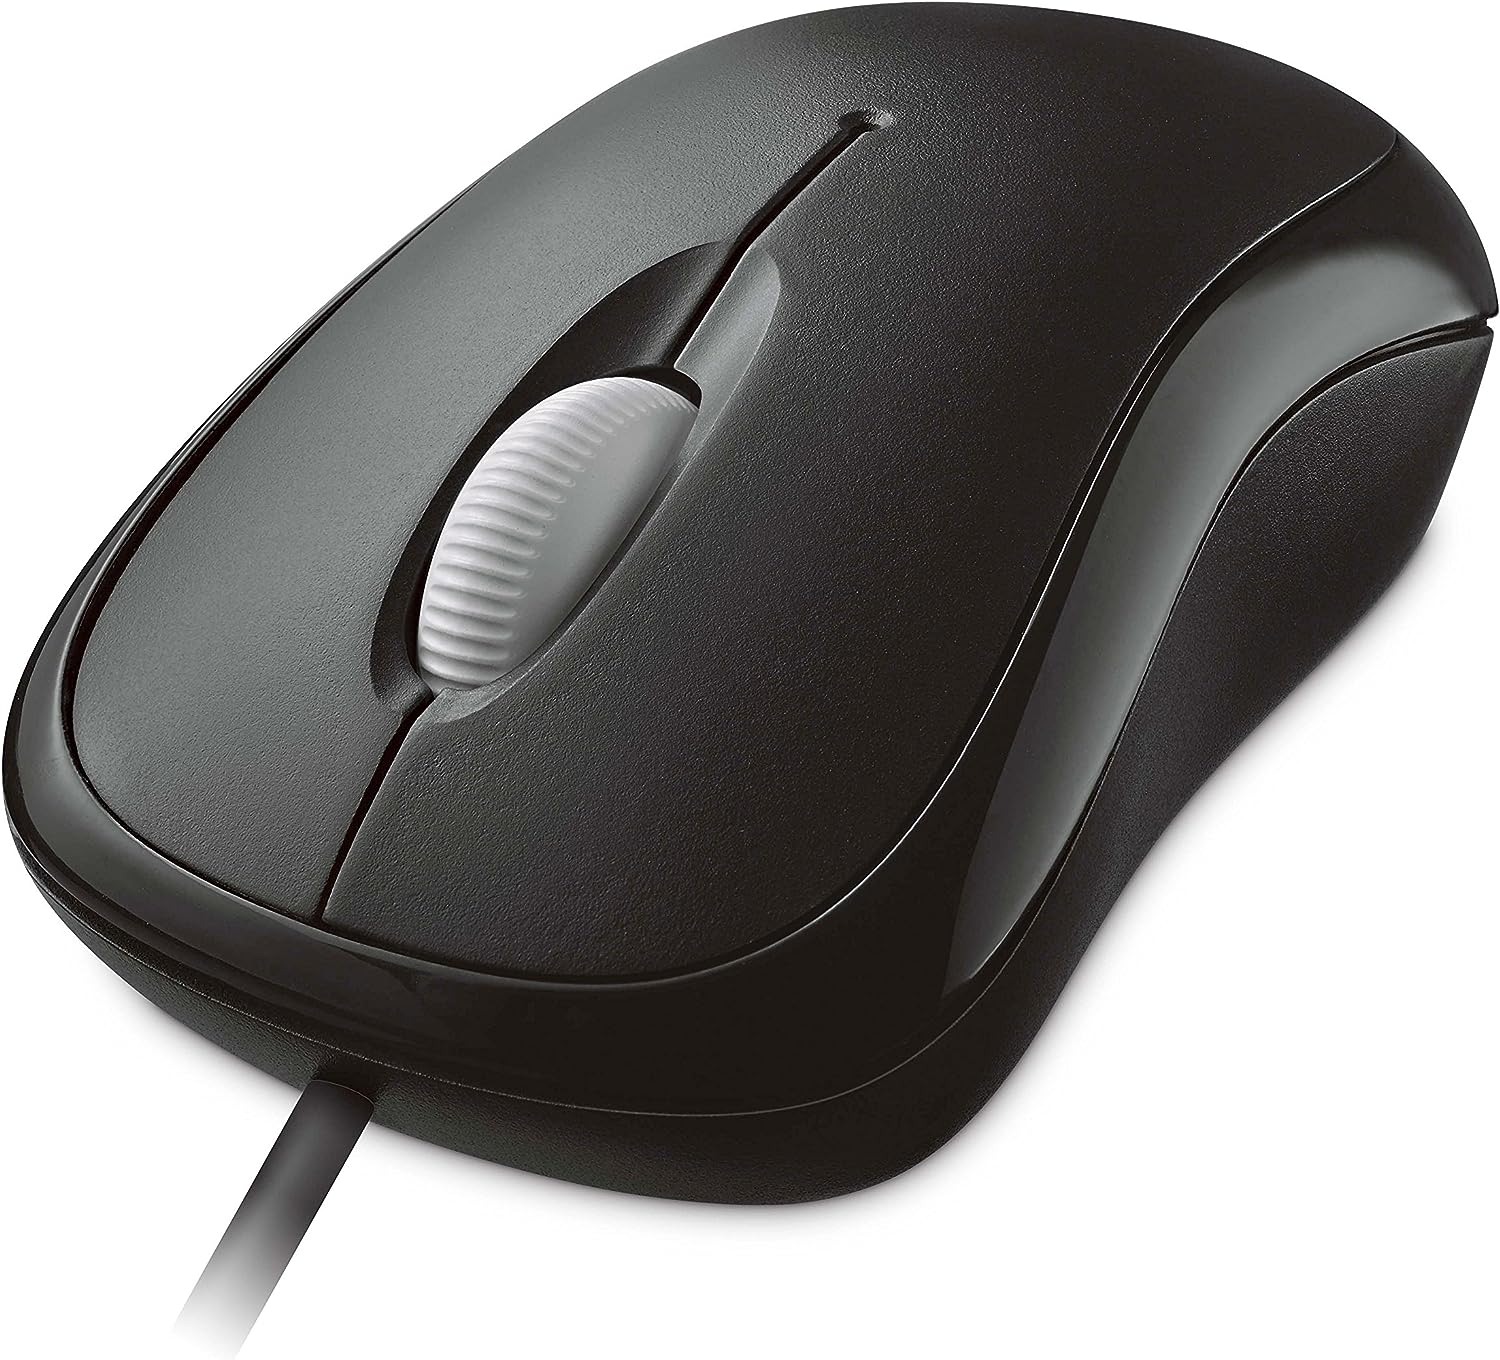 Microsoft Basic Optical Mouse for Business - Black - Pristine